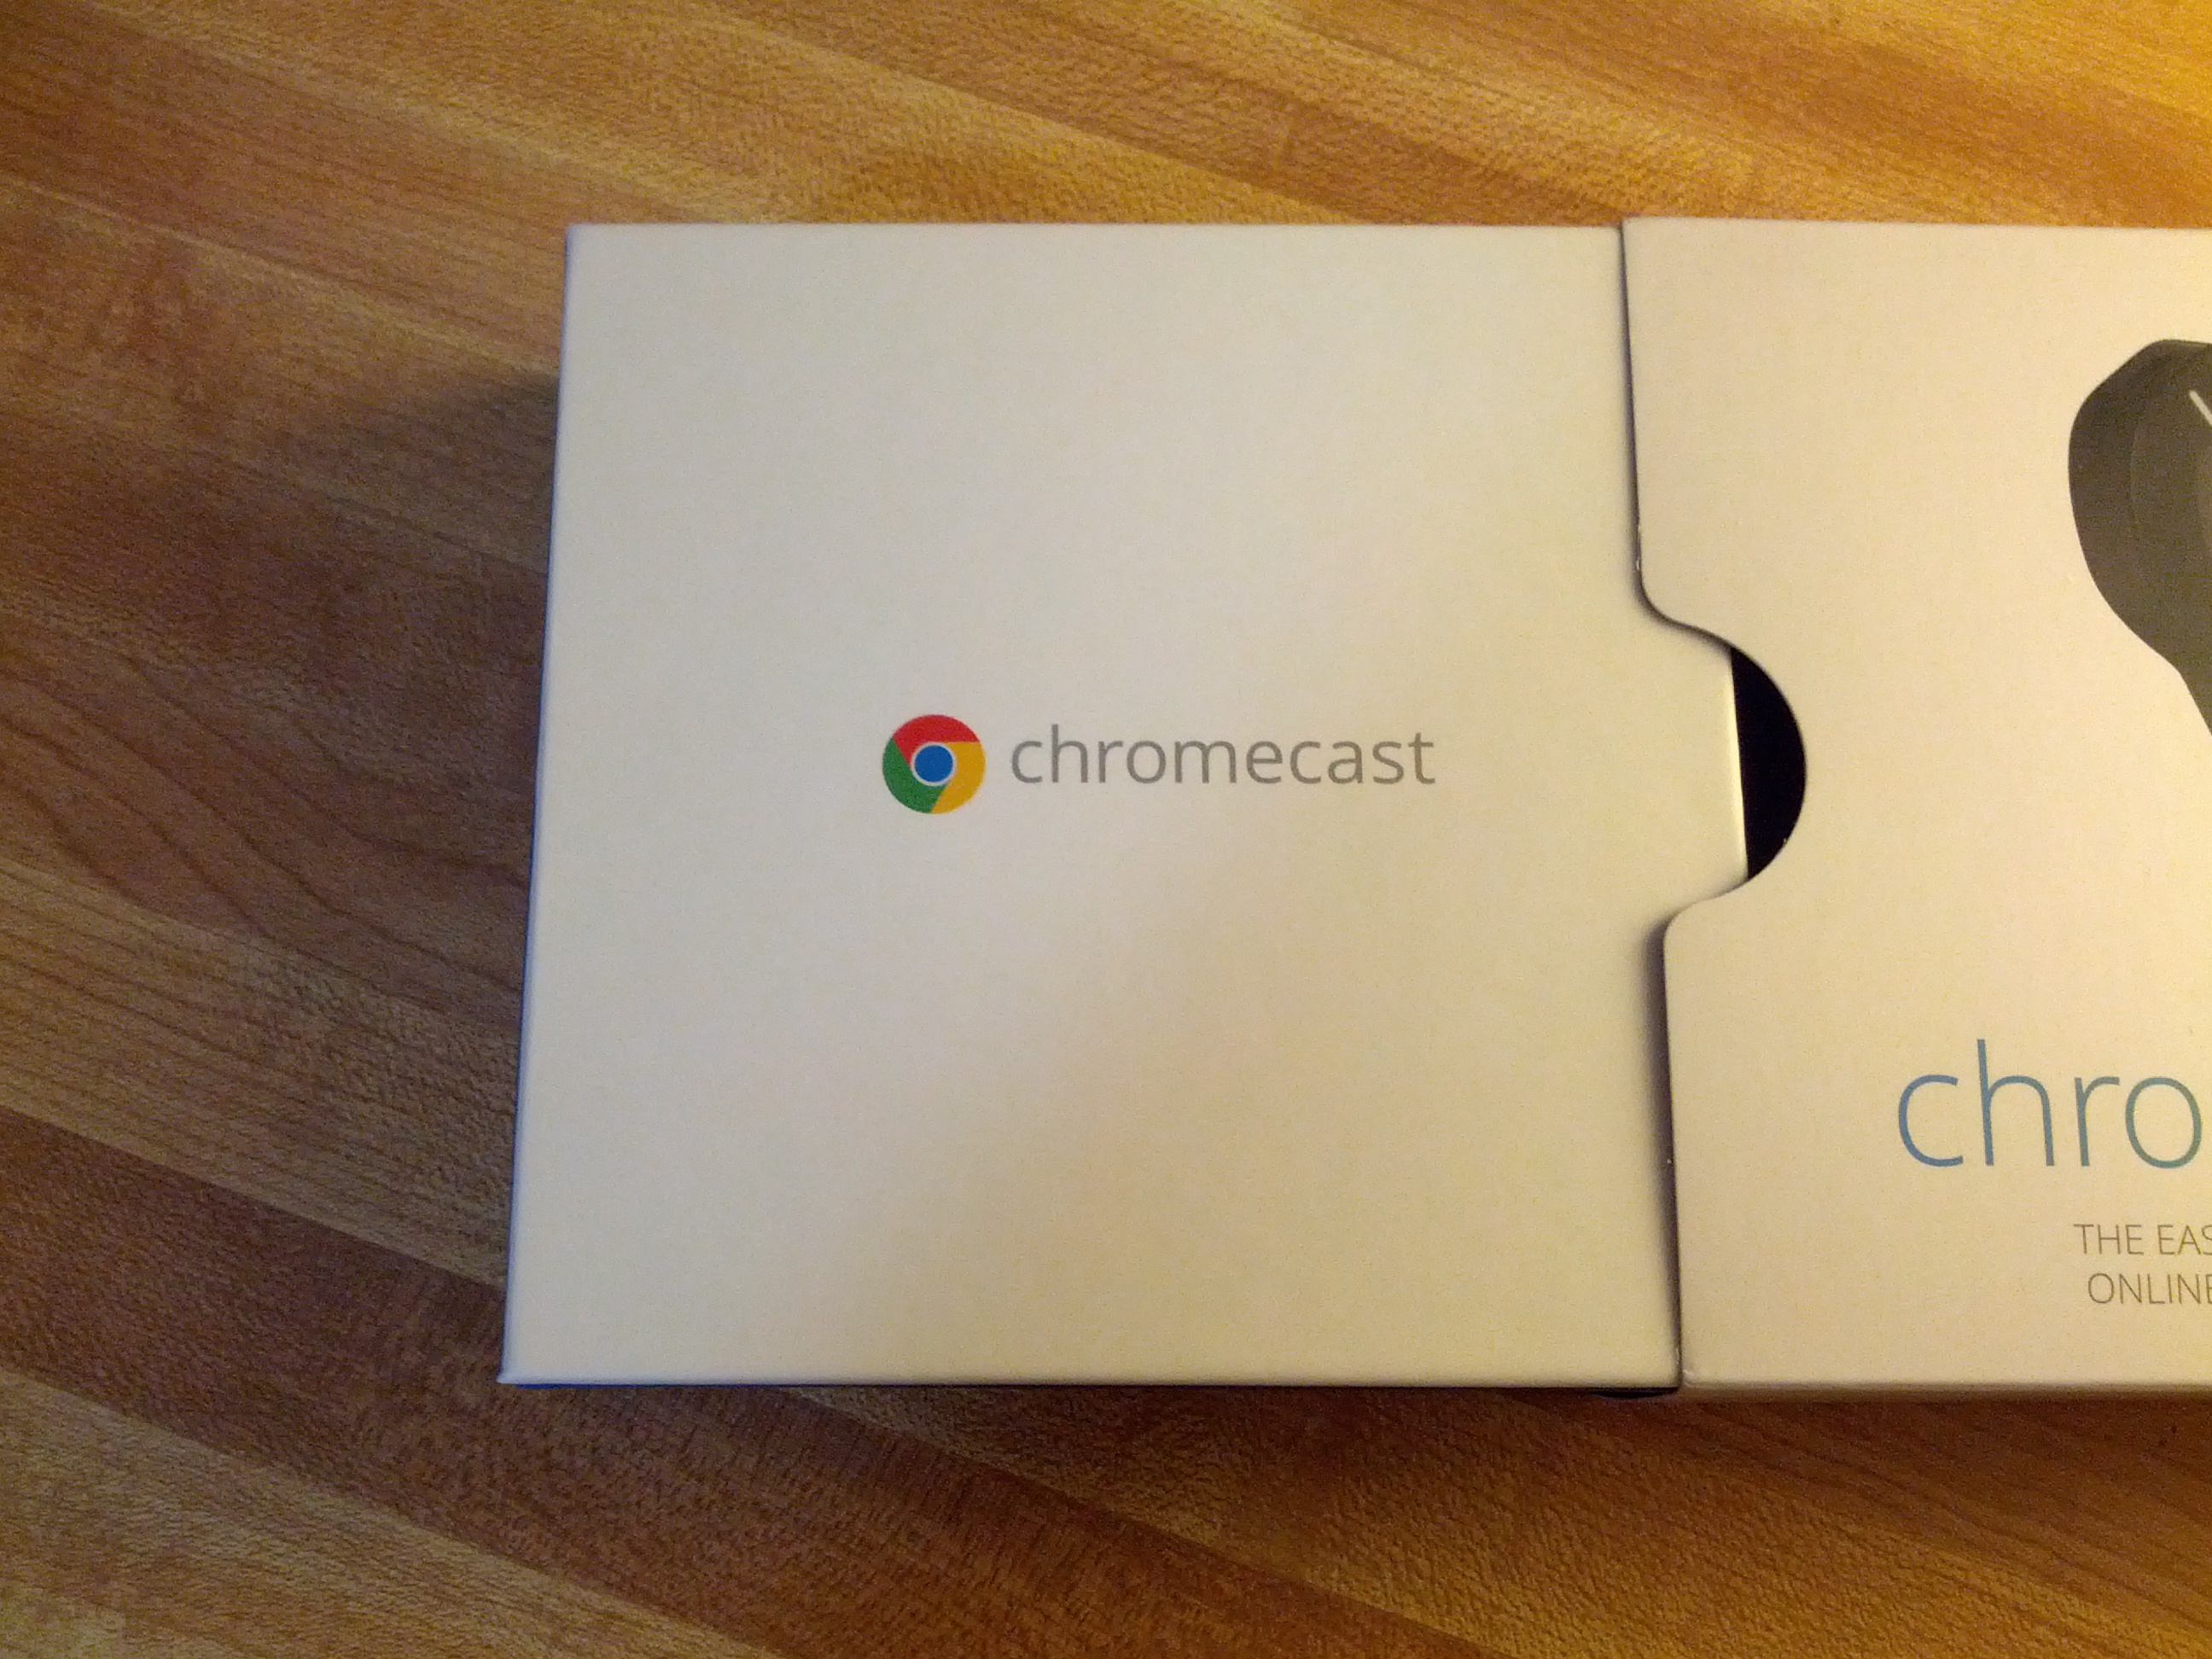 Chromecast Box - Removing the Sleeve